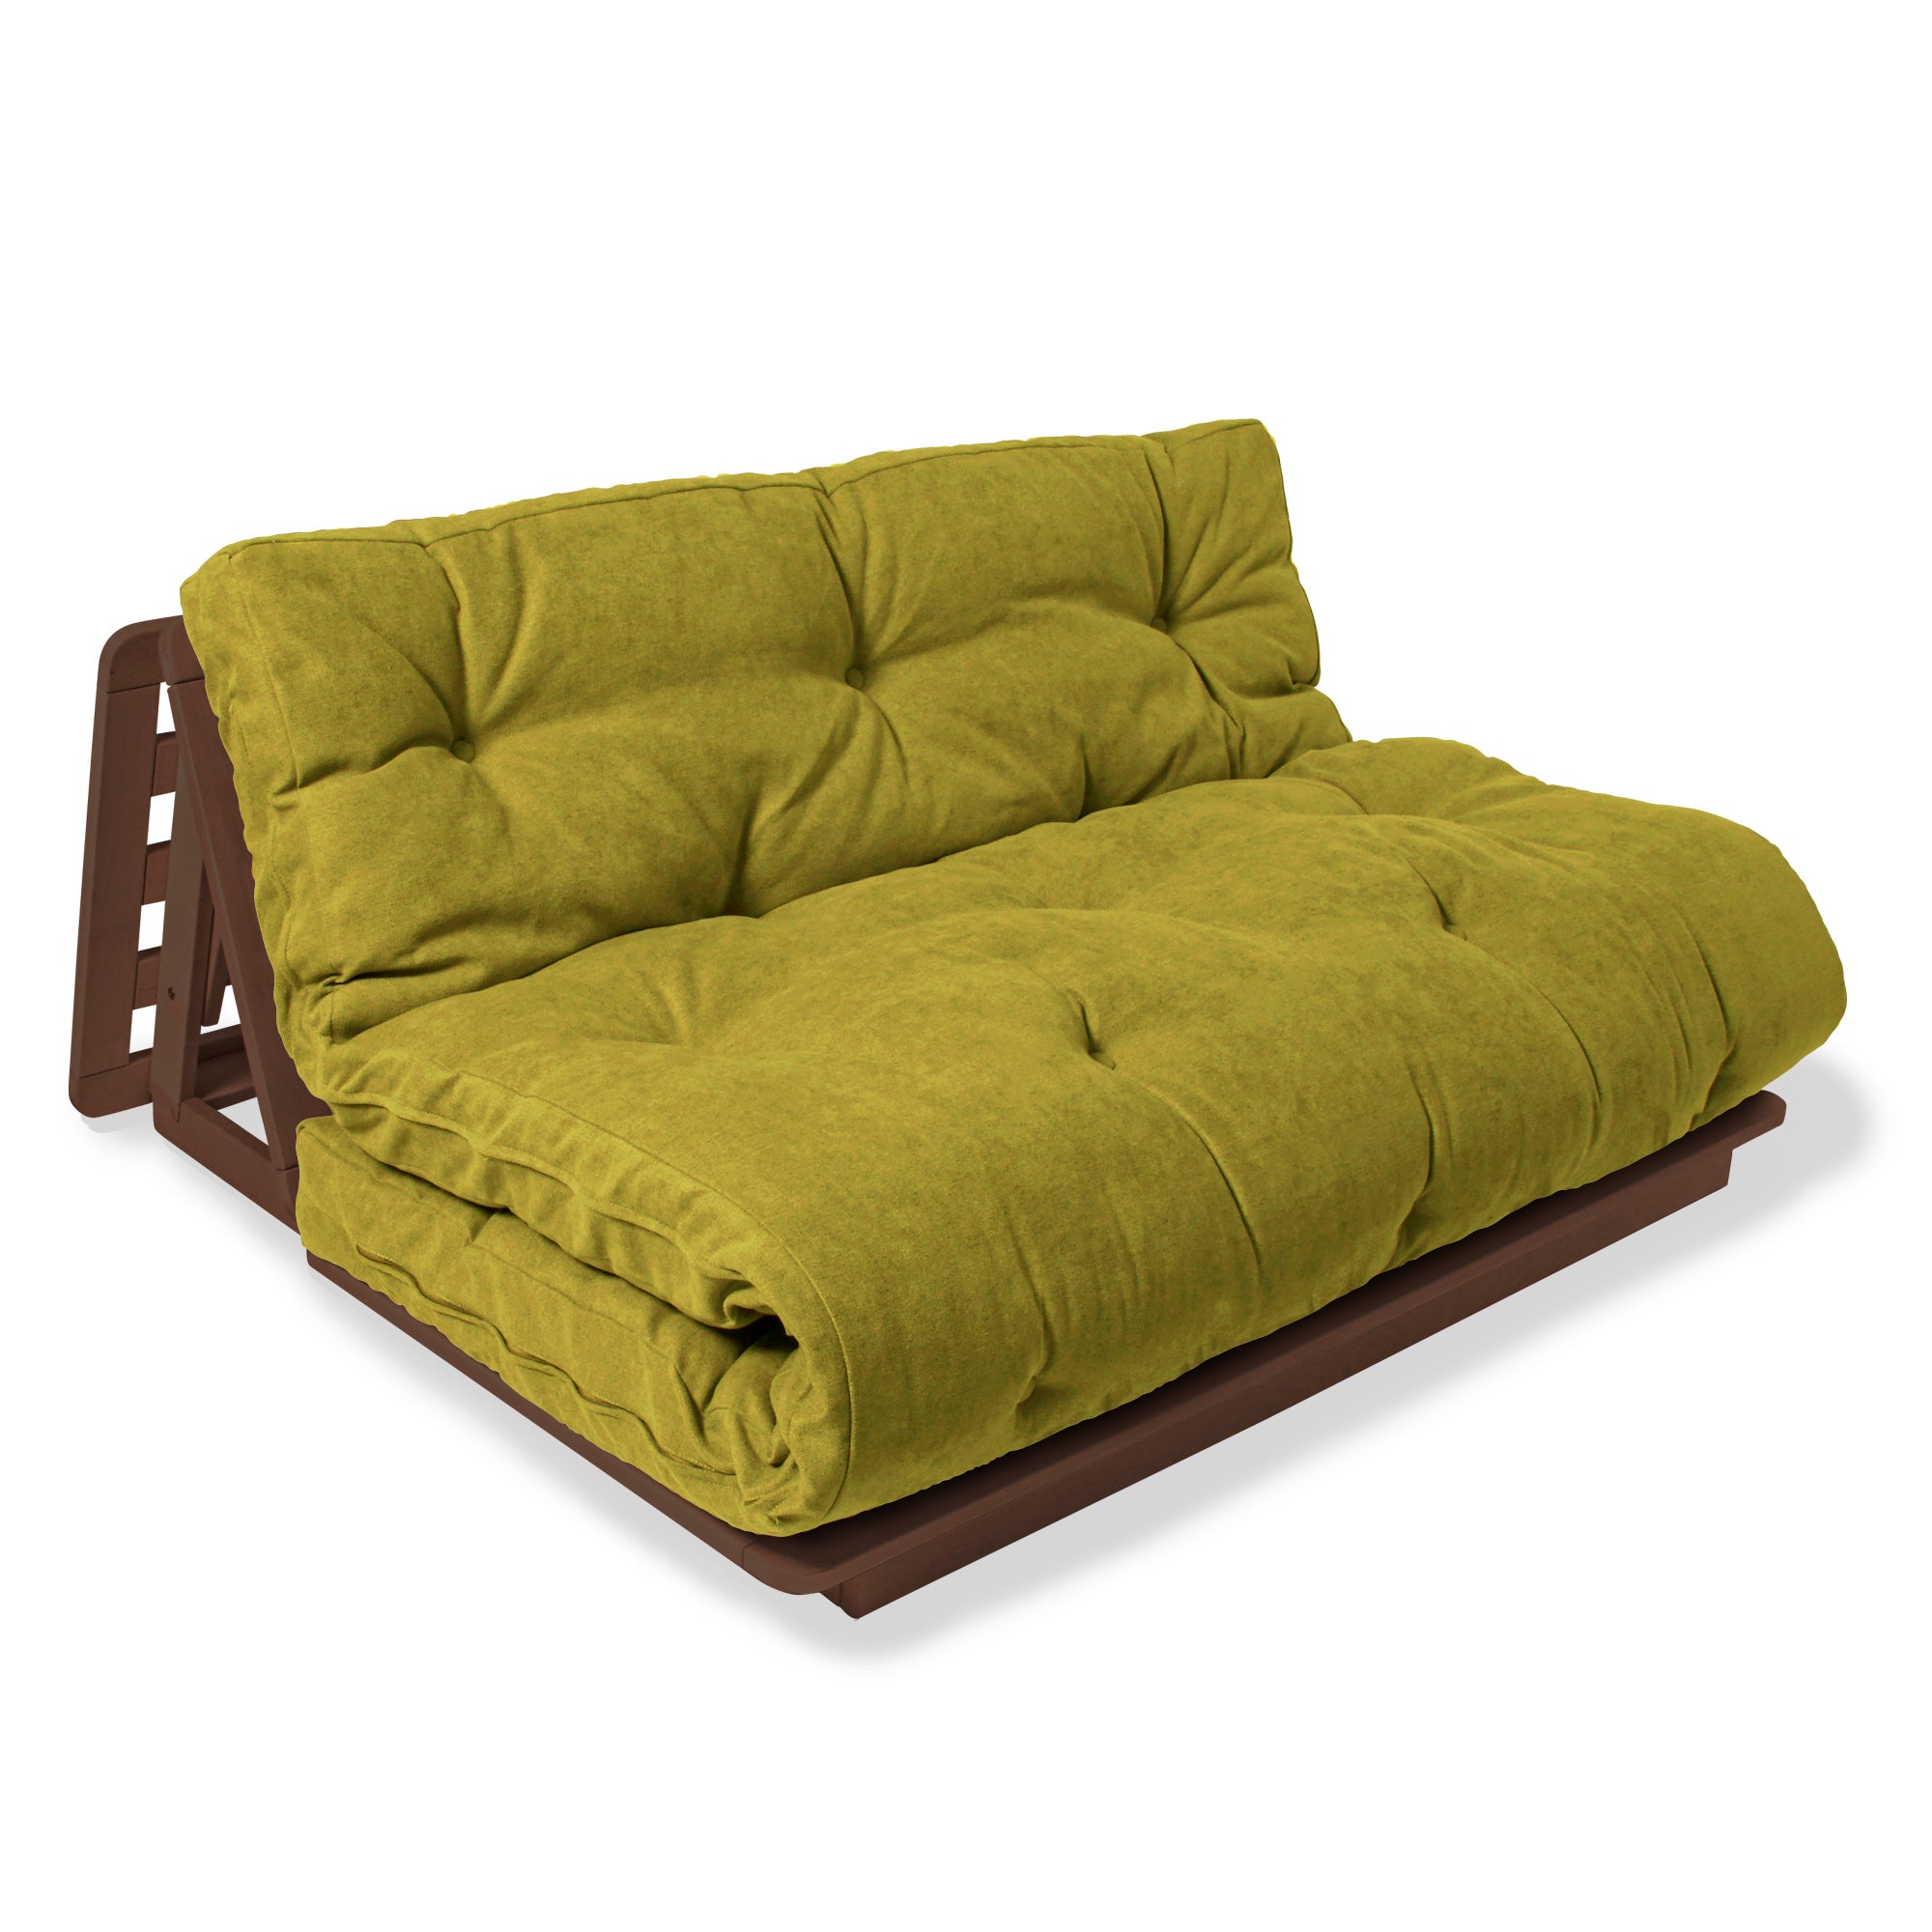 LAYTI-140 Futon Chair-walnut frame-graphite fabric